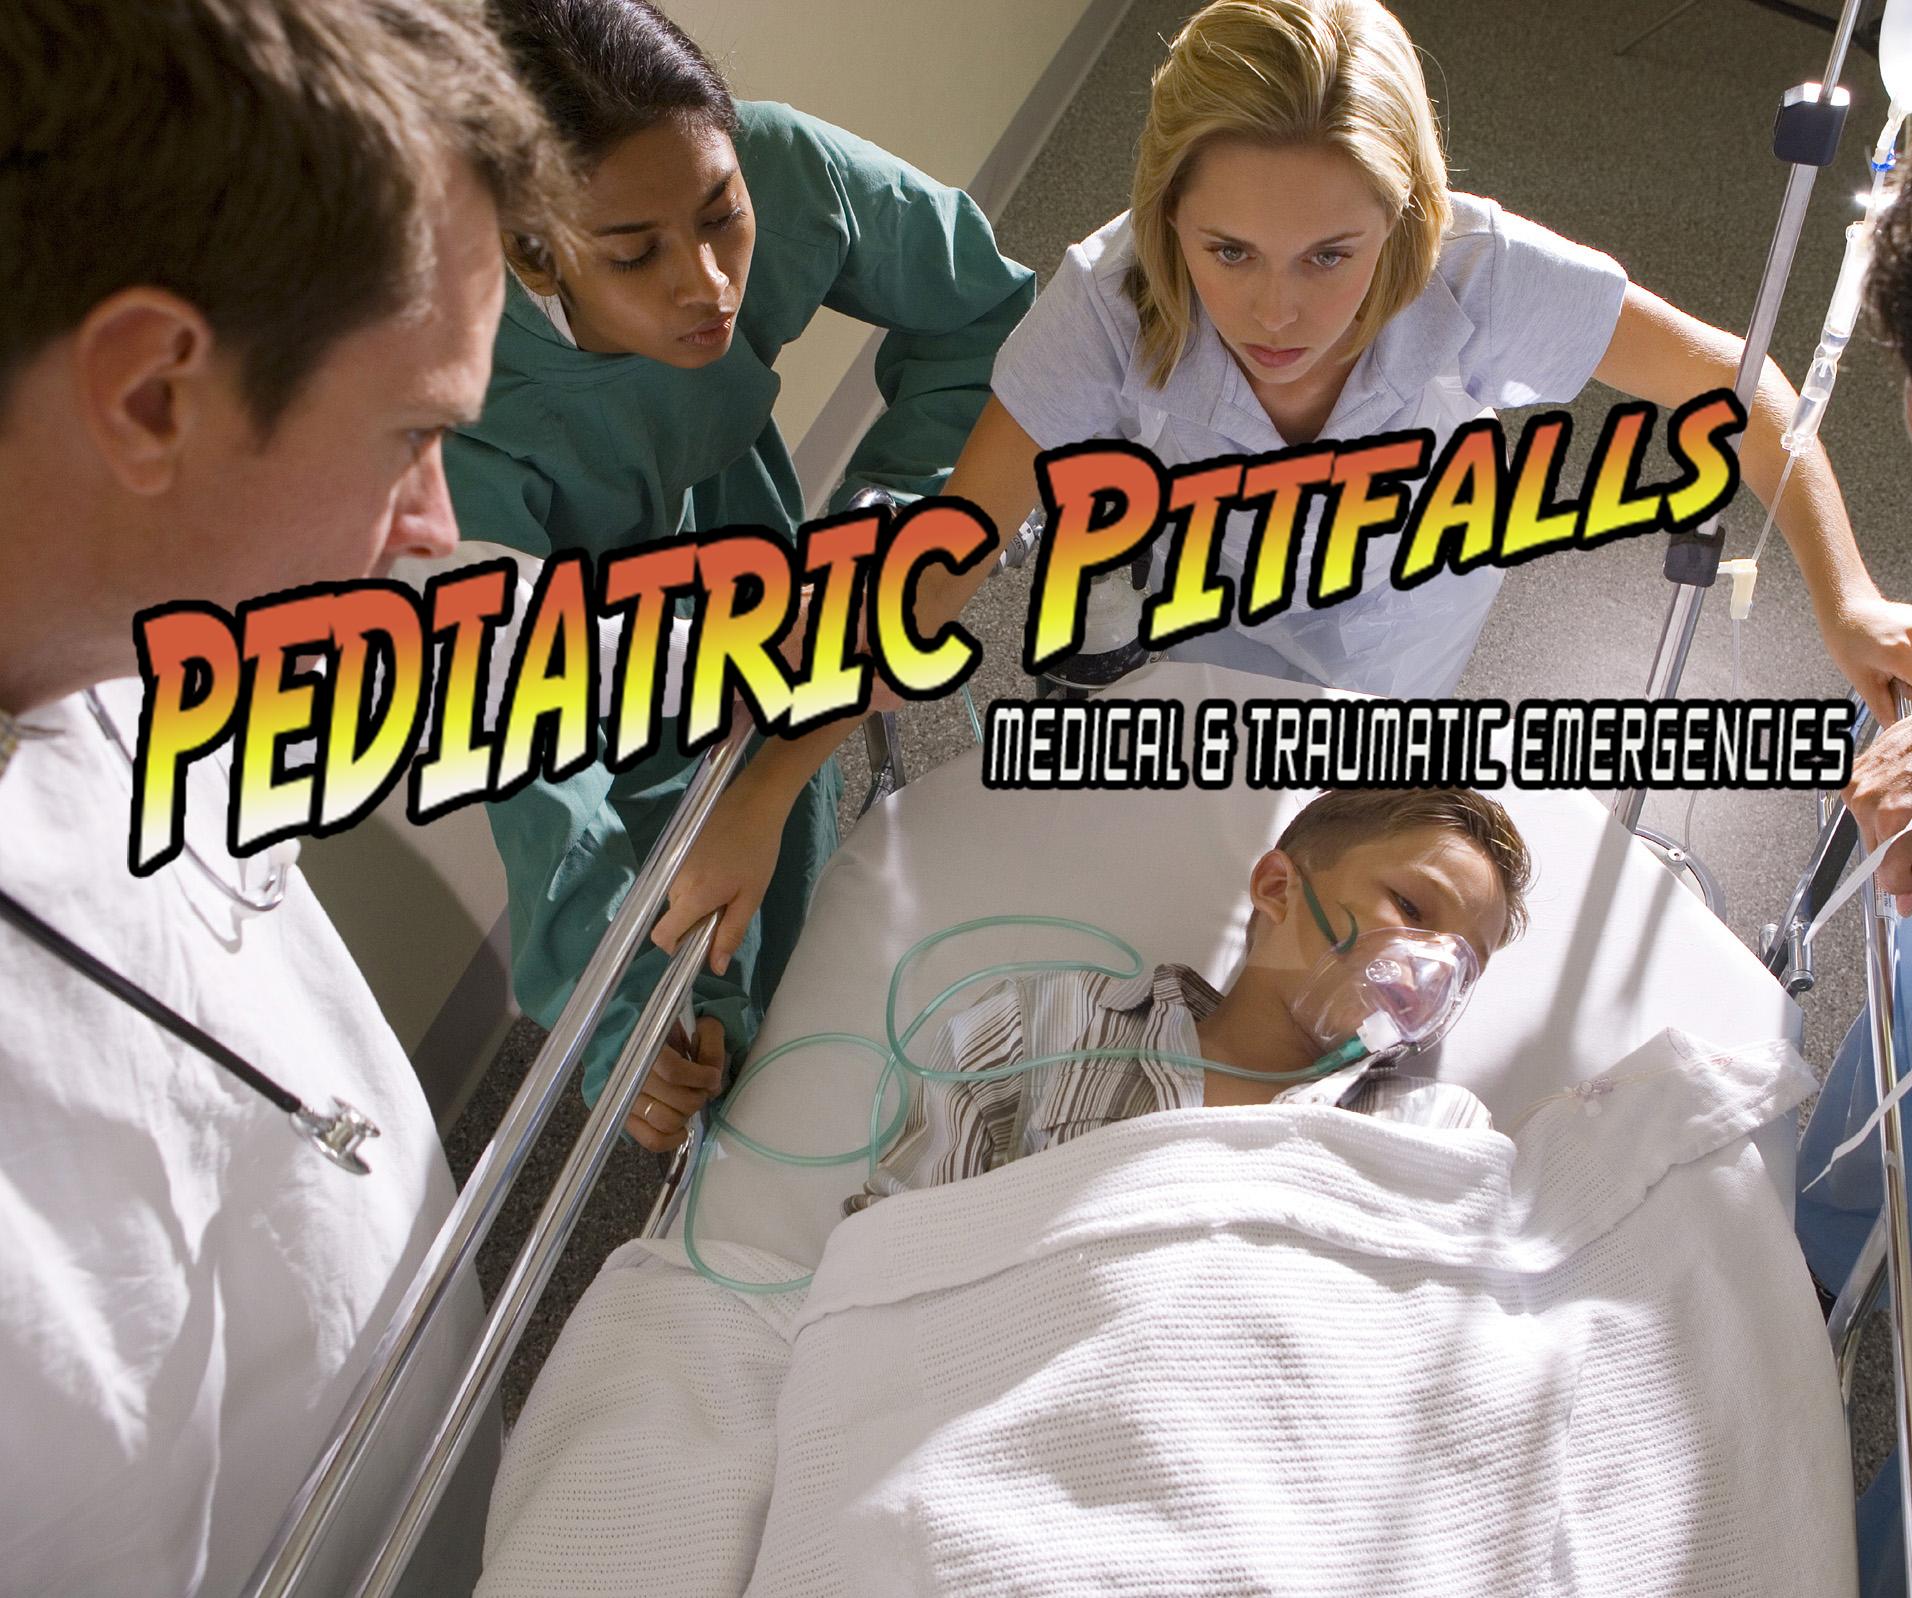 Peds Pitfalls Medical & Traumatic Emergencies - Cedars-Sinai Sim Center, CA